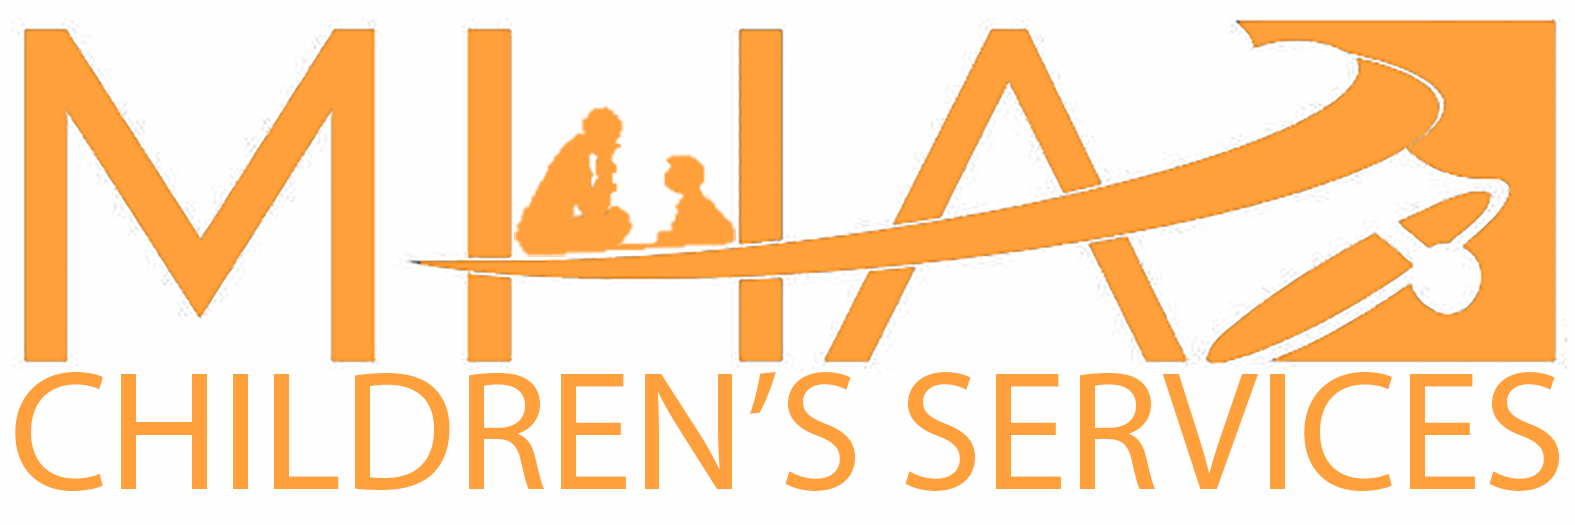 A logo of children 's services